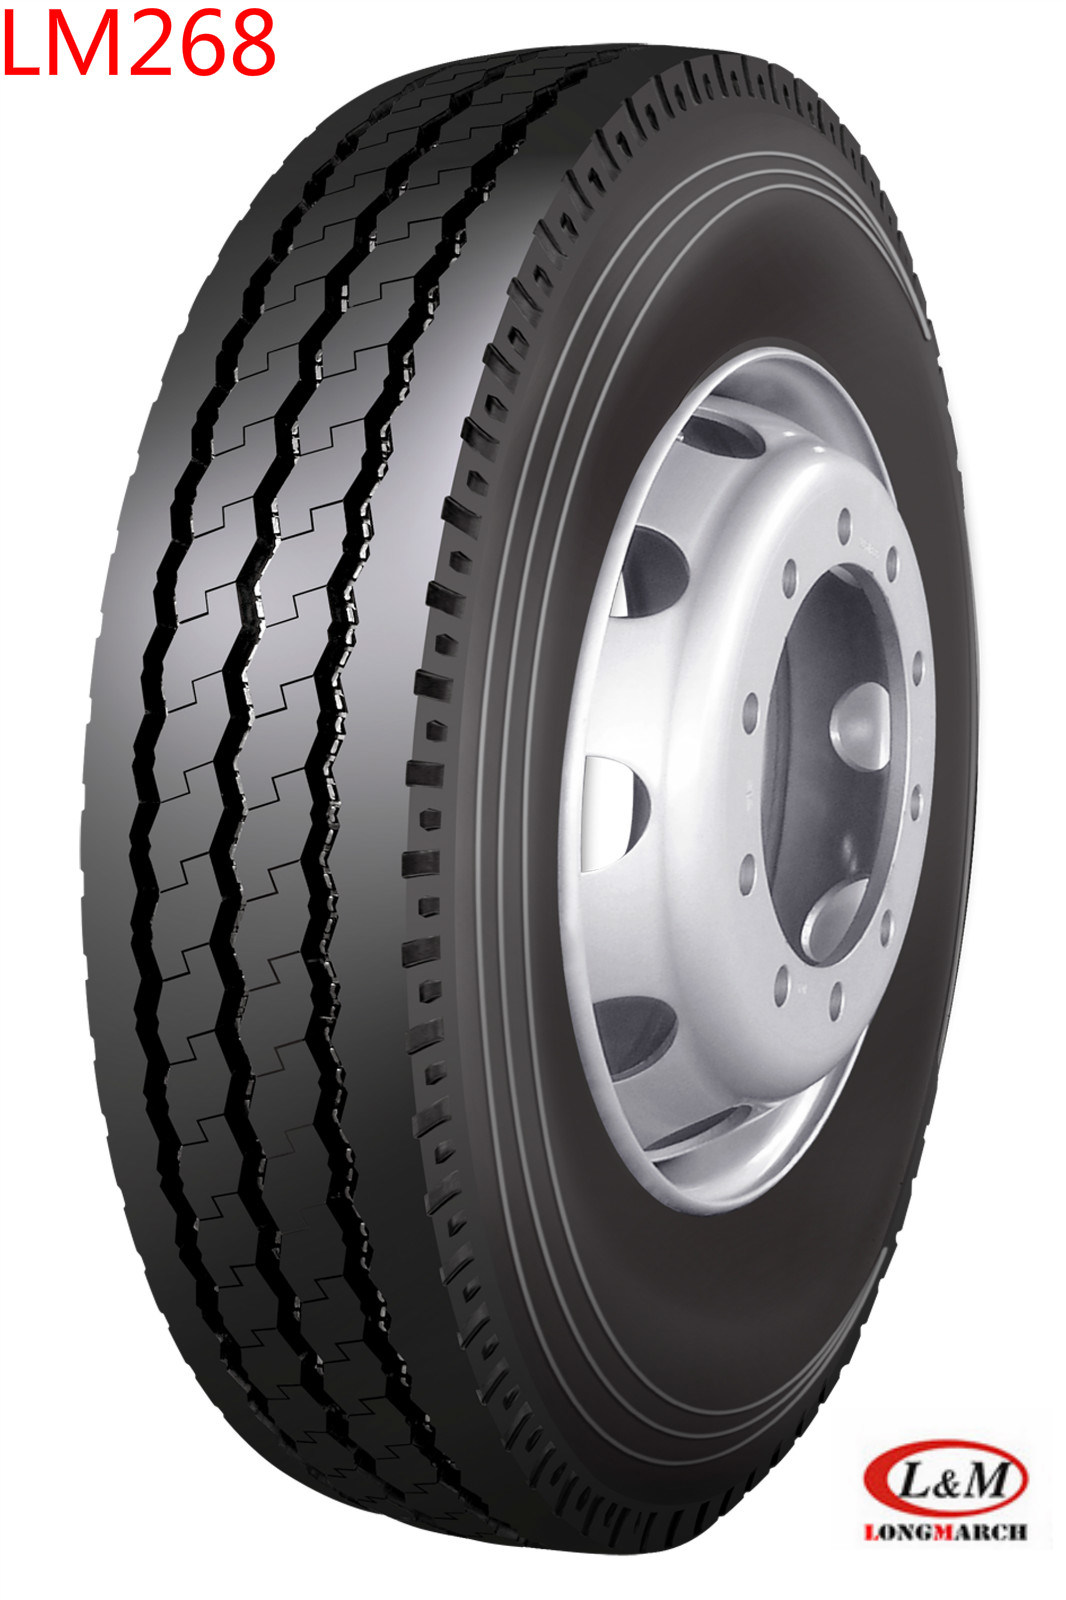 LONGMARCH Drive/Steer/Trailer Truck Tyre (LM268)